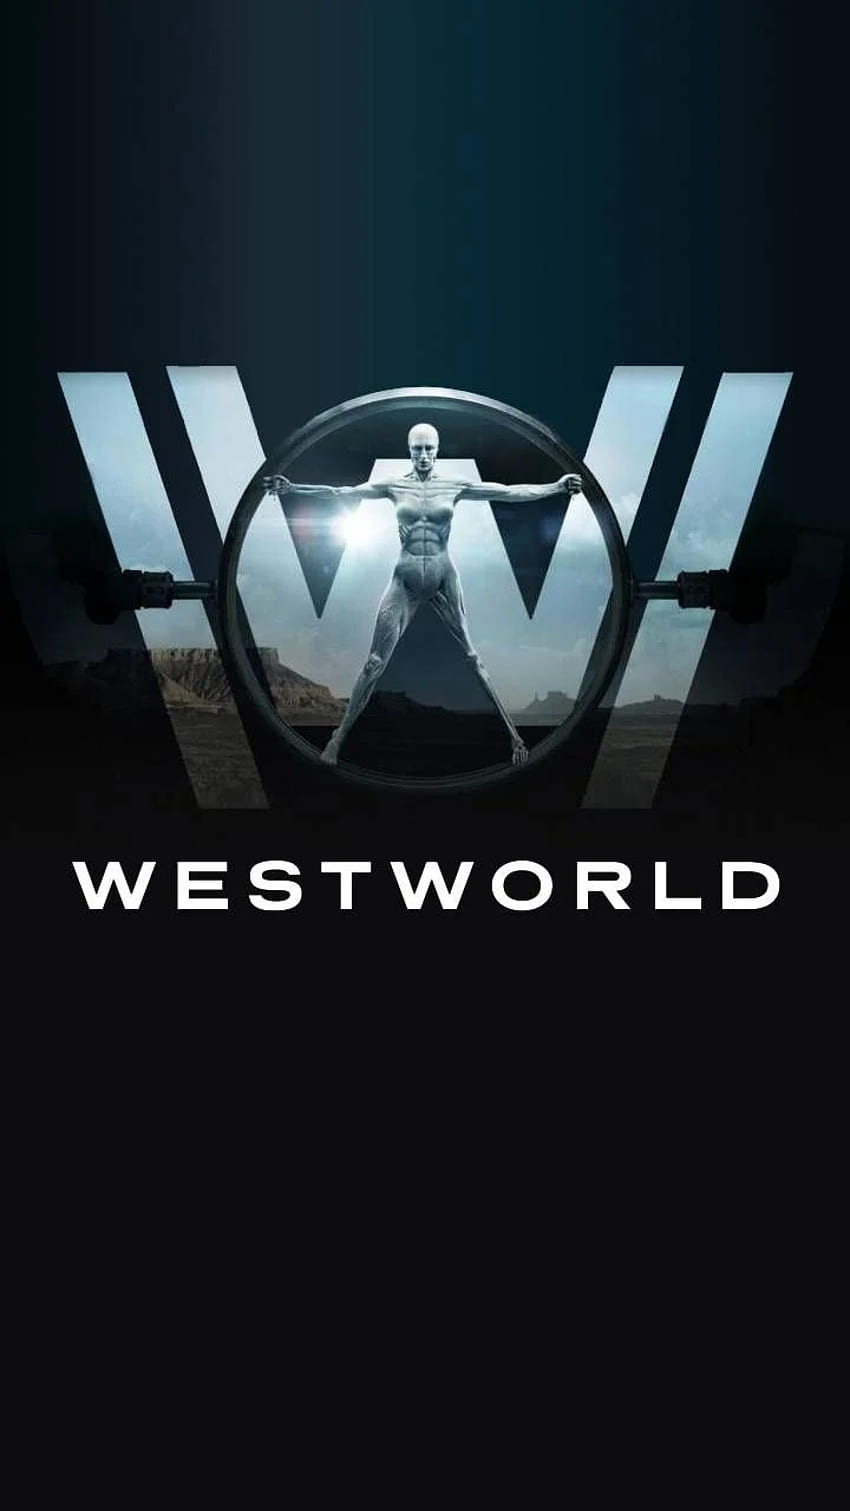 Westworld Logo 4k Sony Xperia X XZ Z5 Premium HD 4 iPhone Wallpapers  Free Download